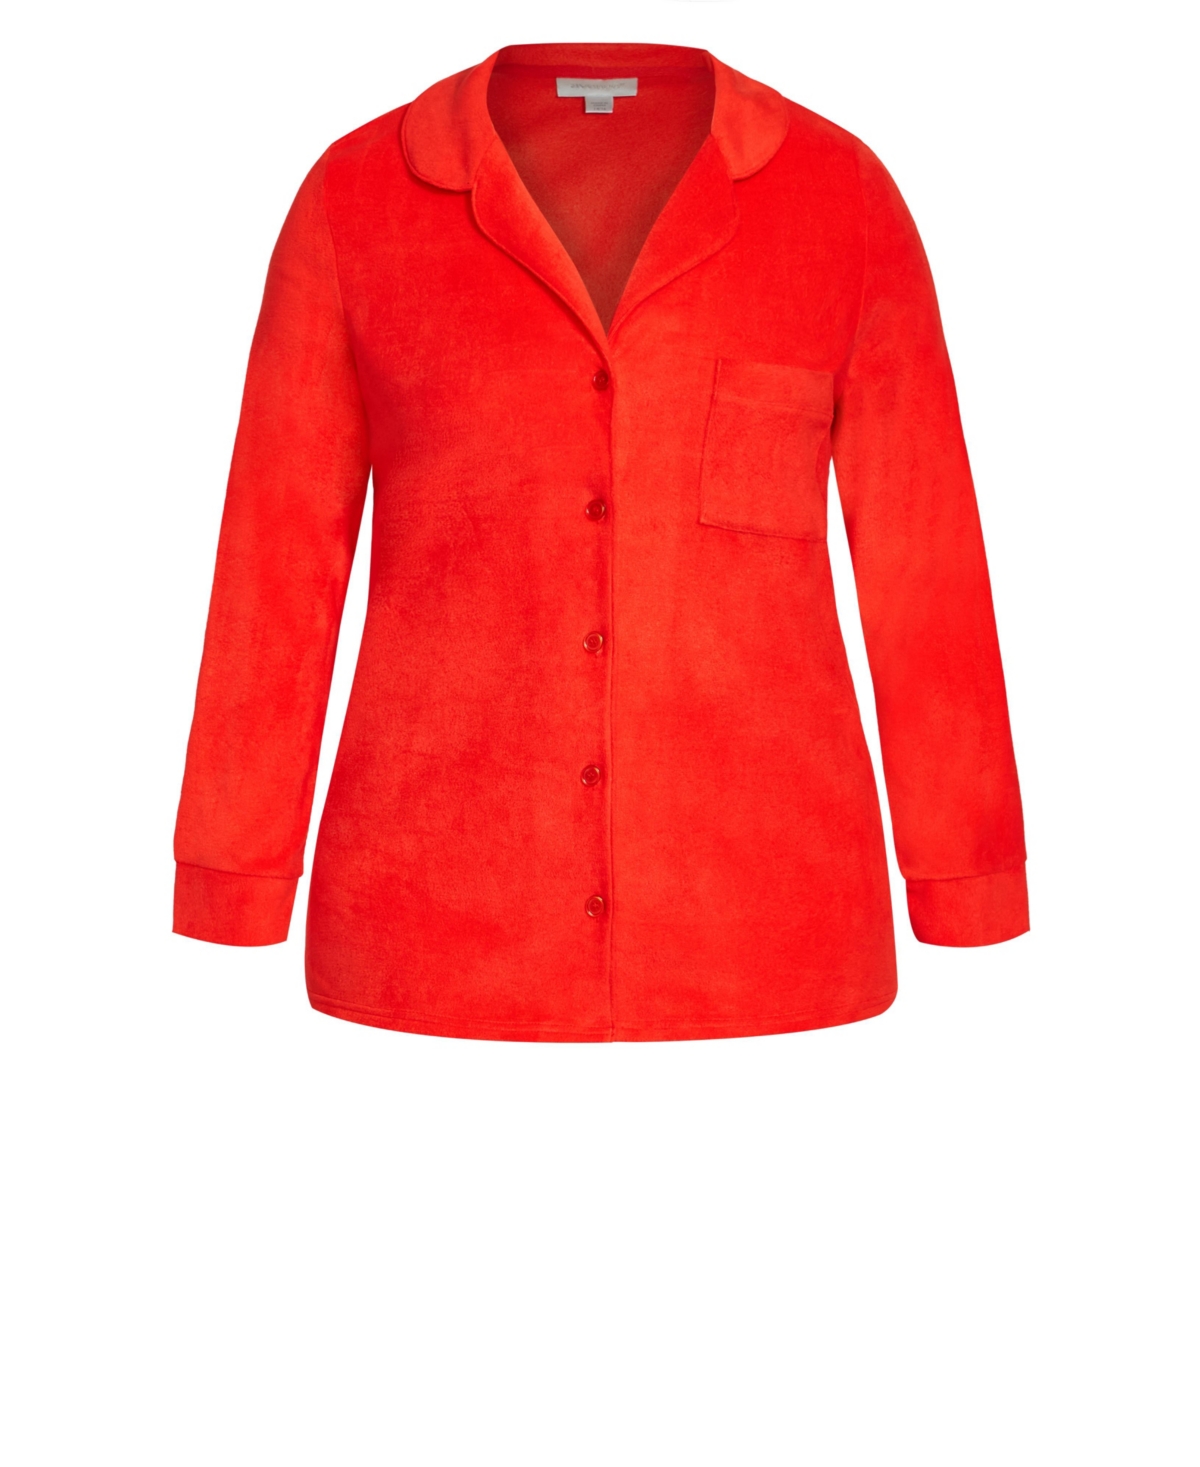 Plus Size Plain Button Fleece Sleep Top - Red